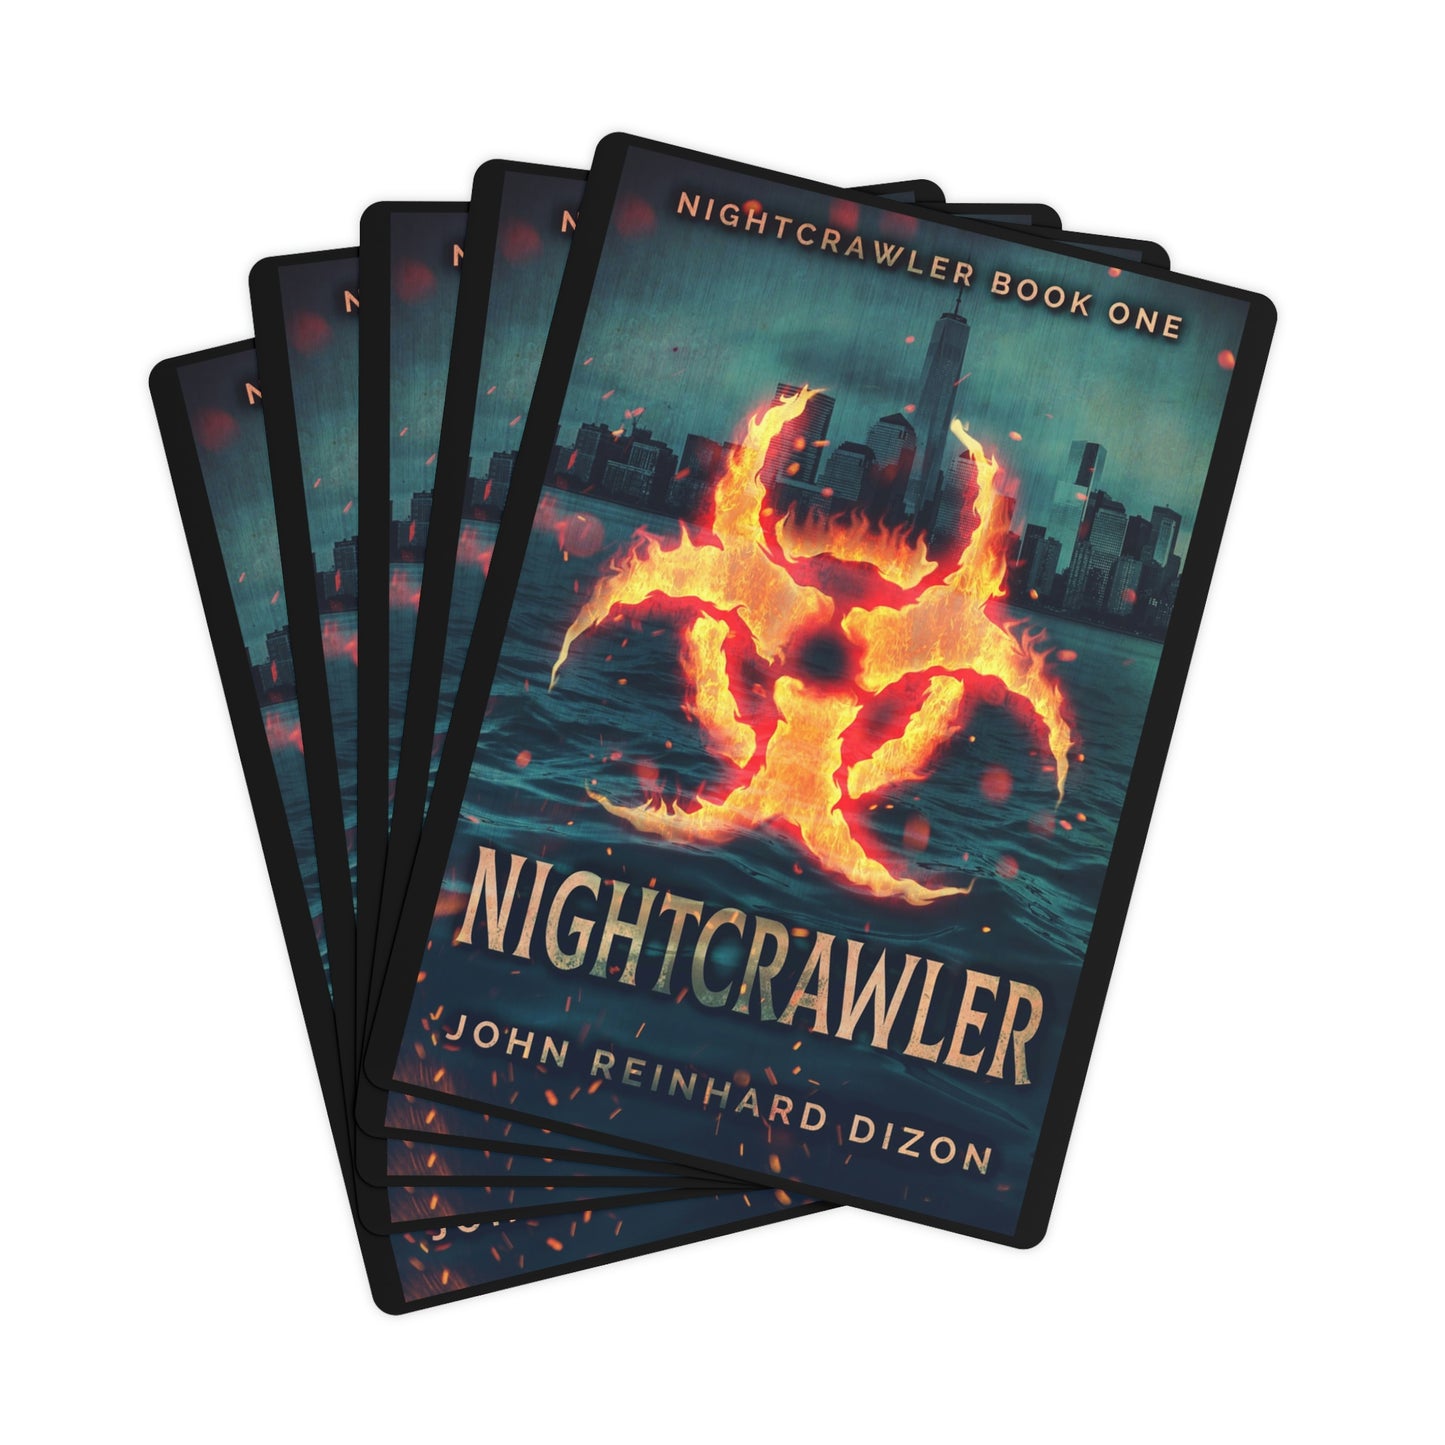 Nightcrawler - Playing Cards